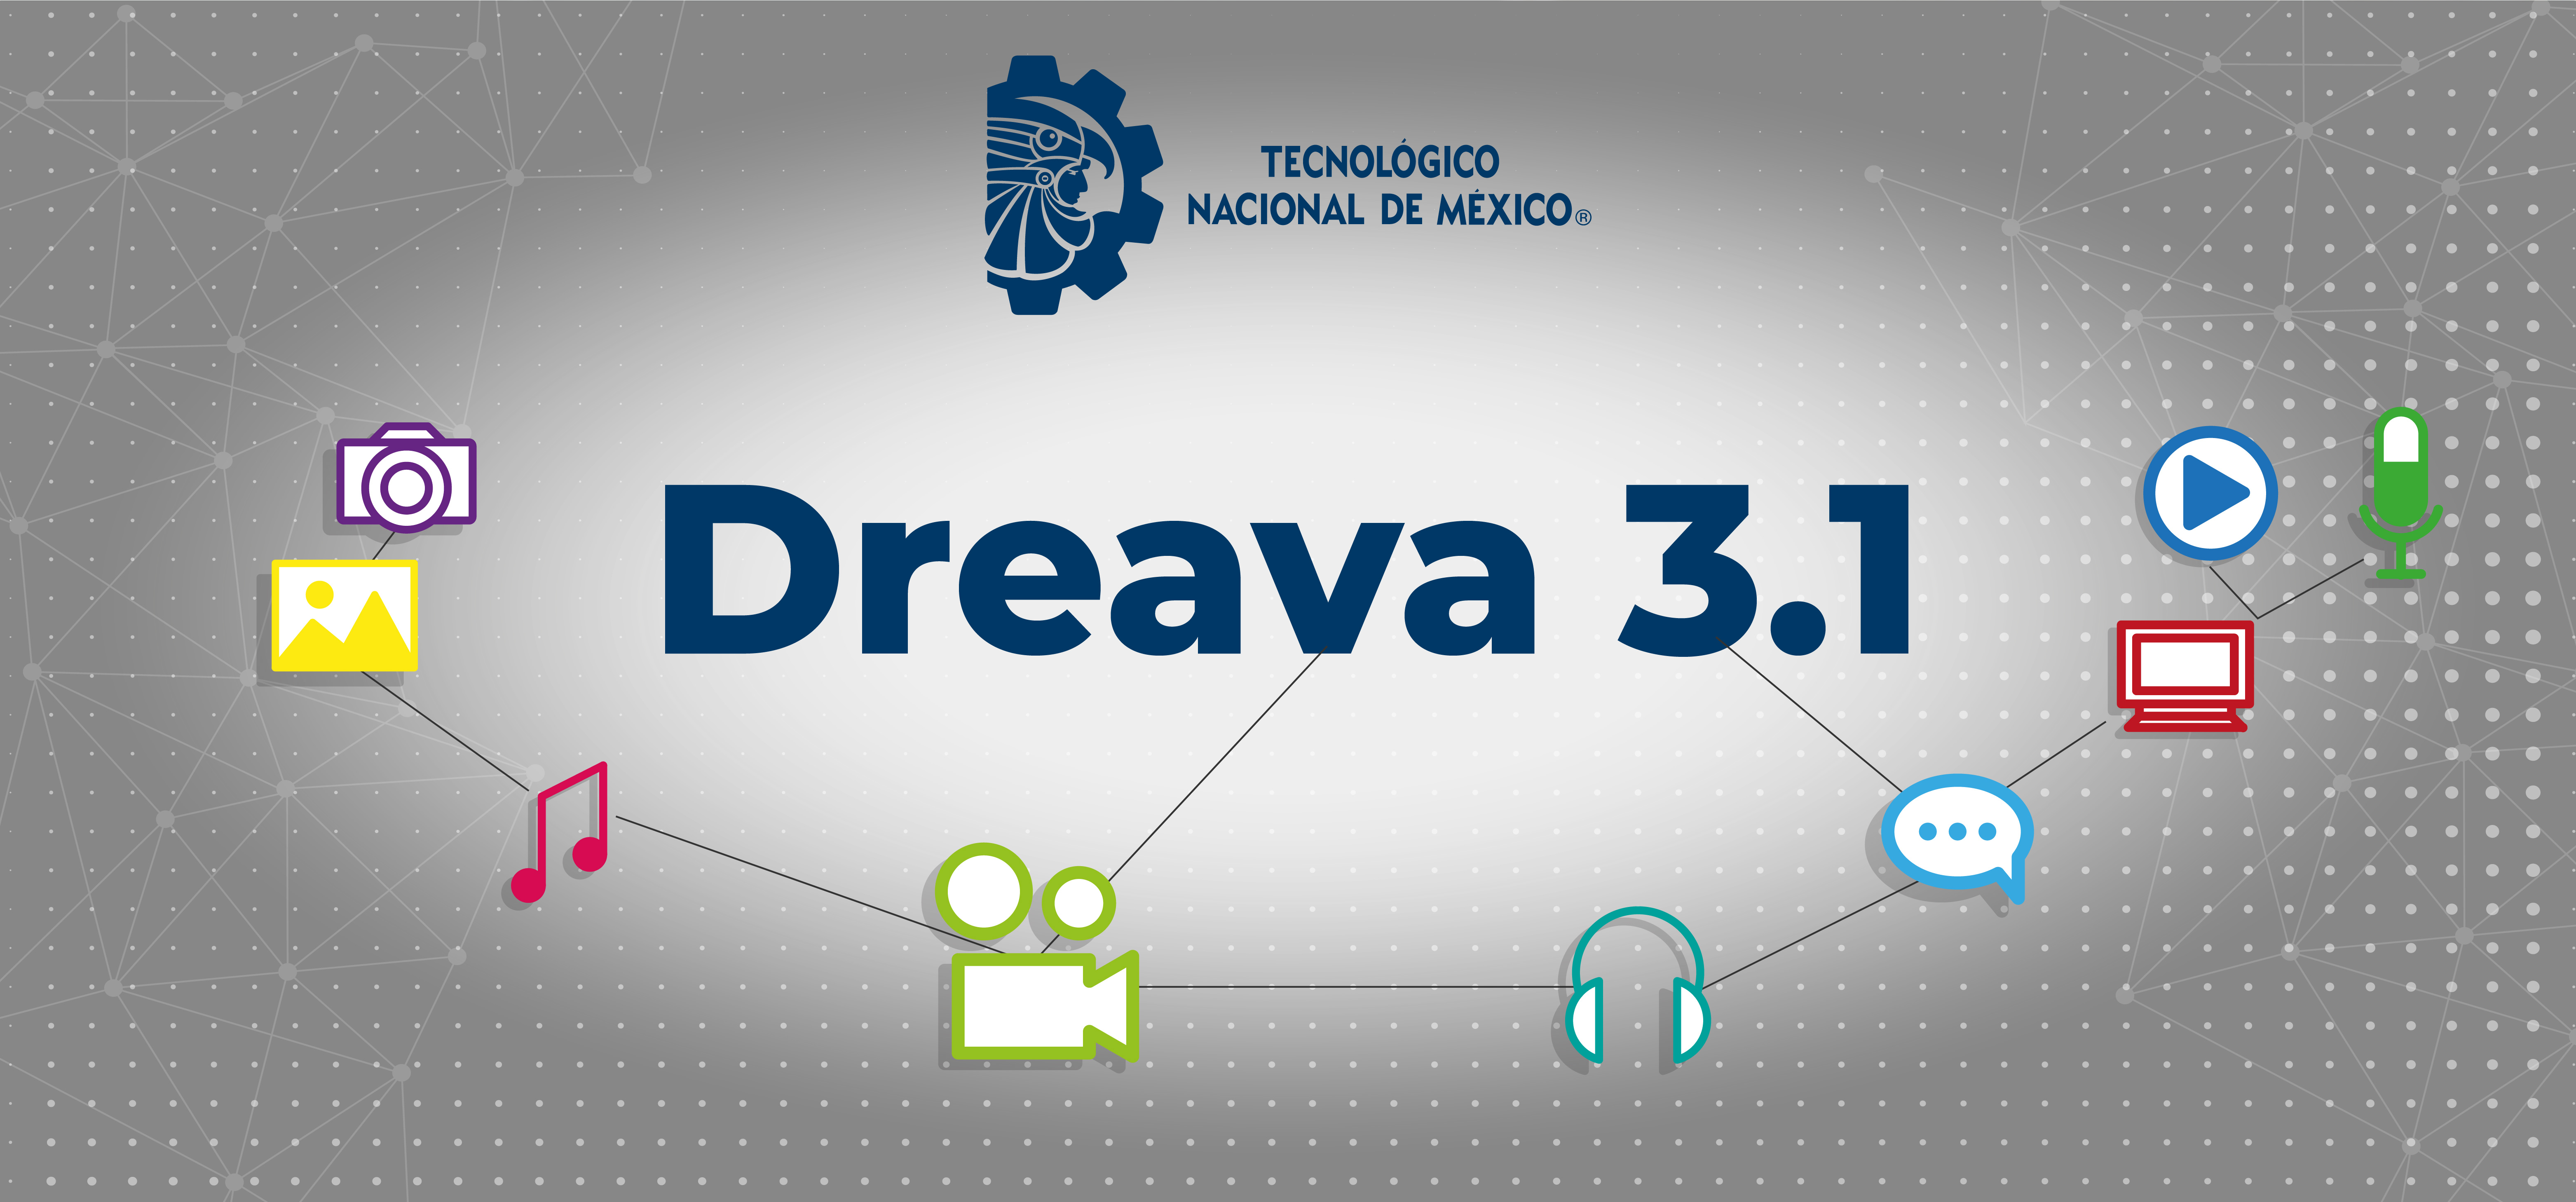 DREAVA 3.1 